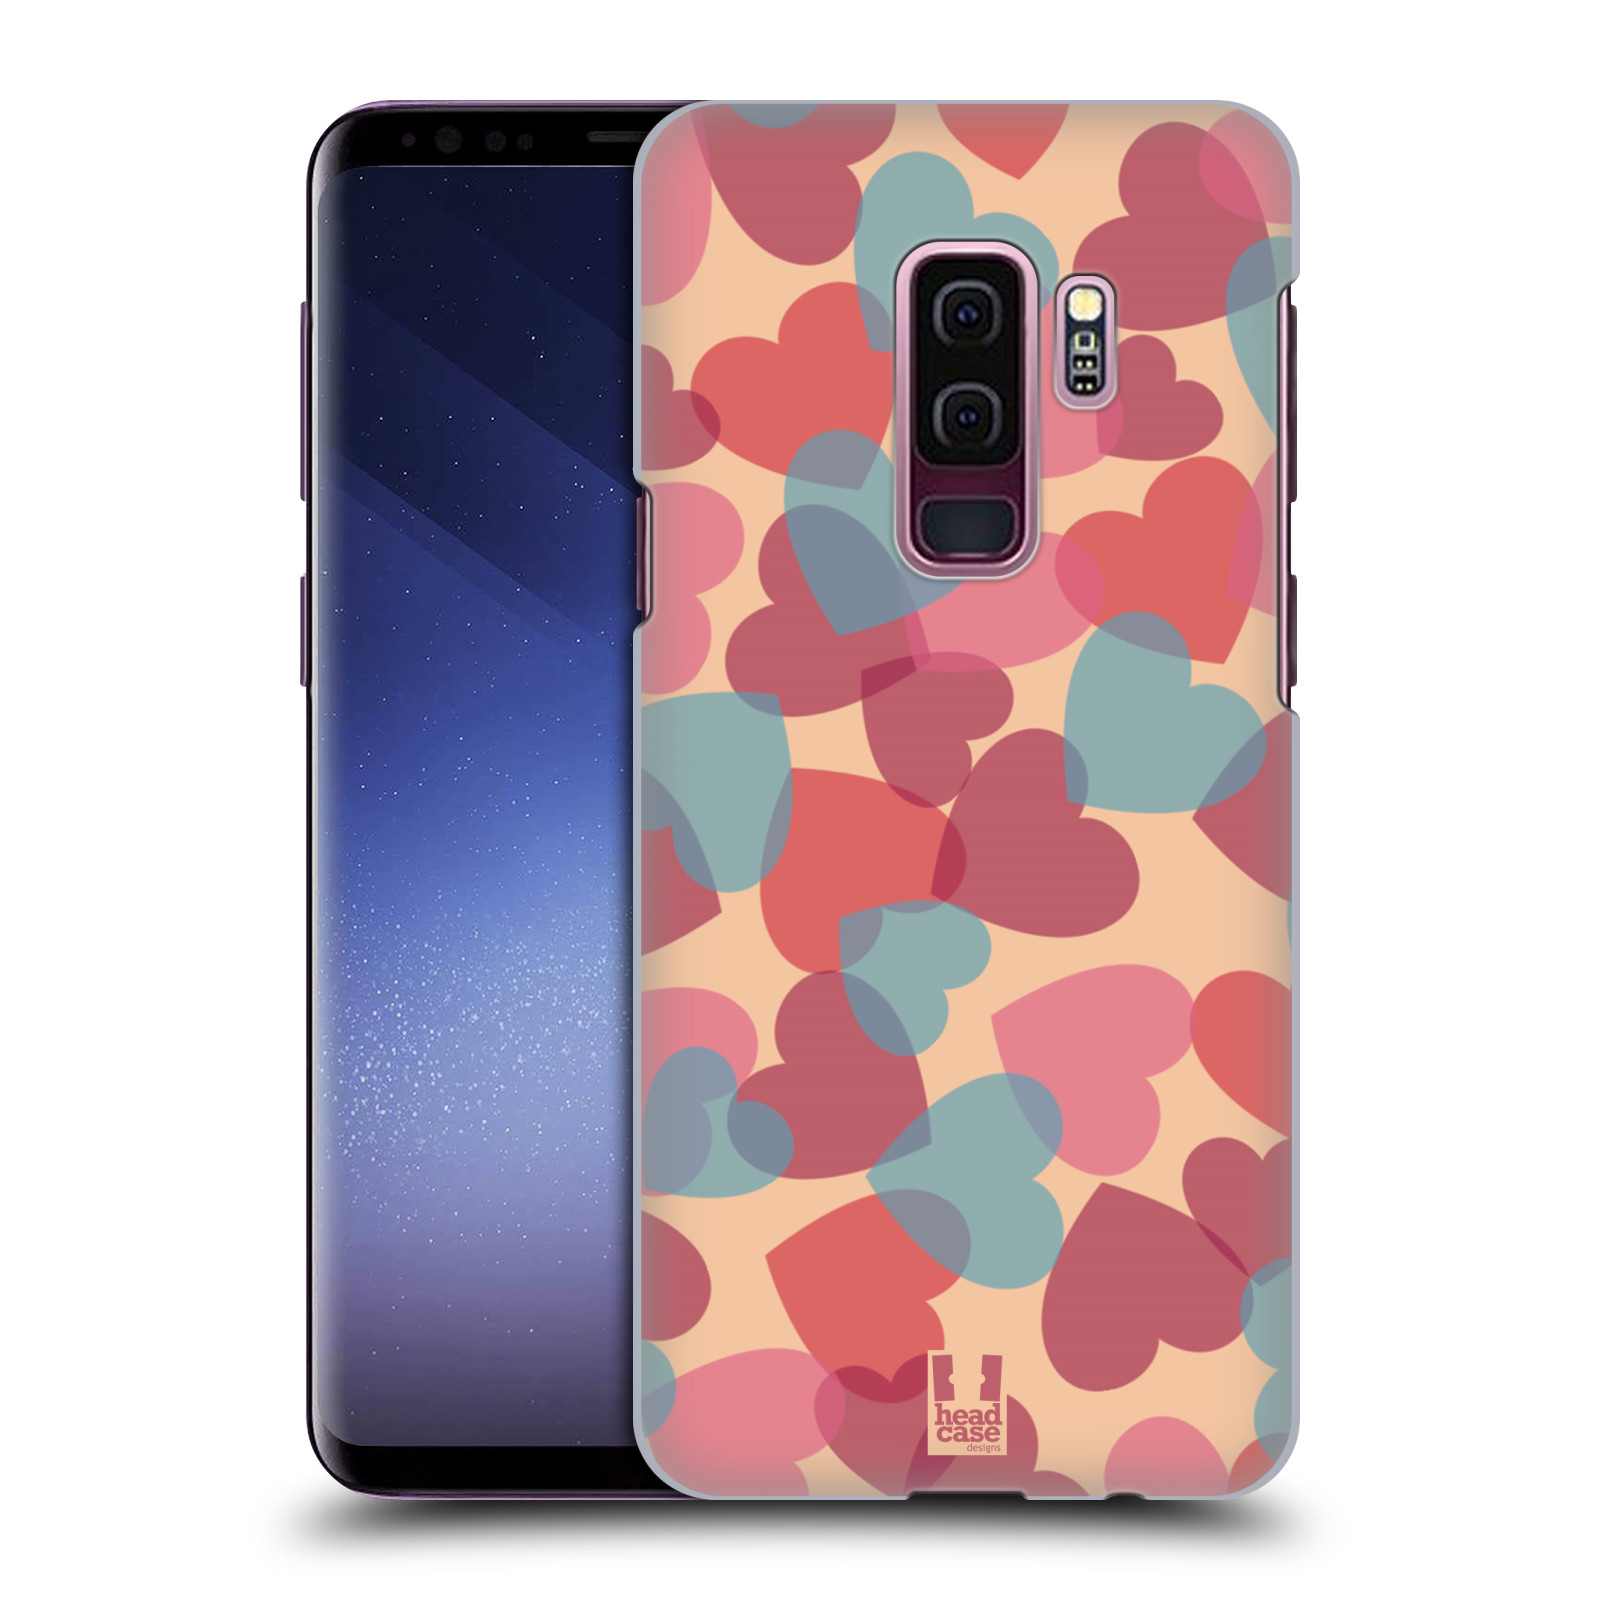 Zadní obal pro mobil Samsung Galaxy S9 PLUS - HEAD CASE - Růžová srdíčka kreslený vzor